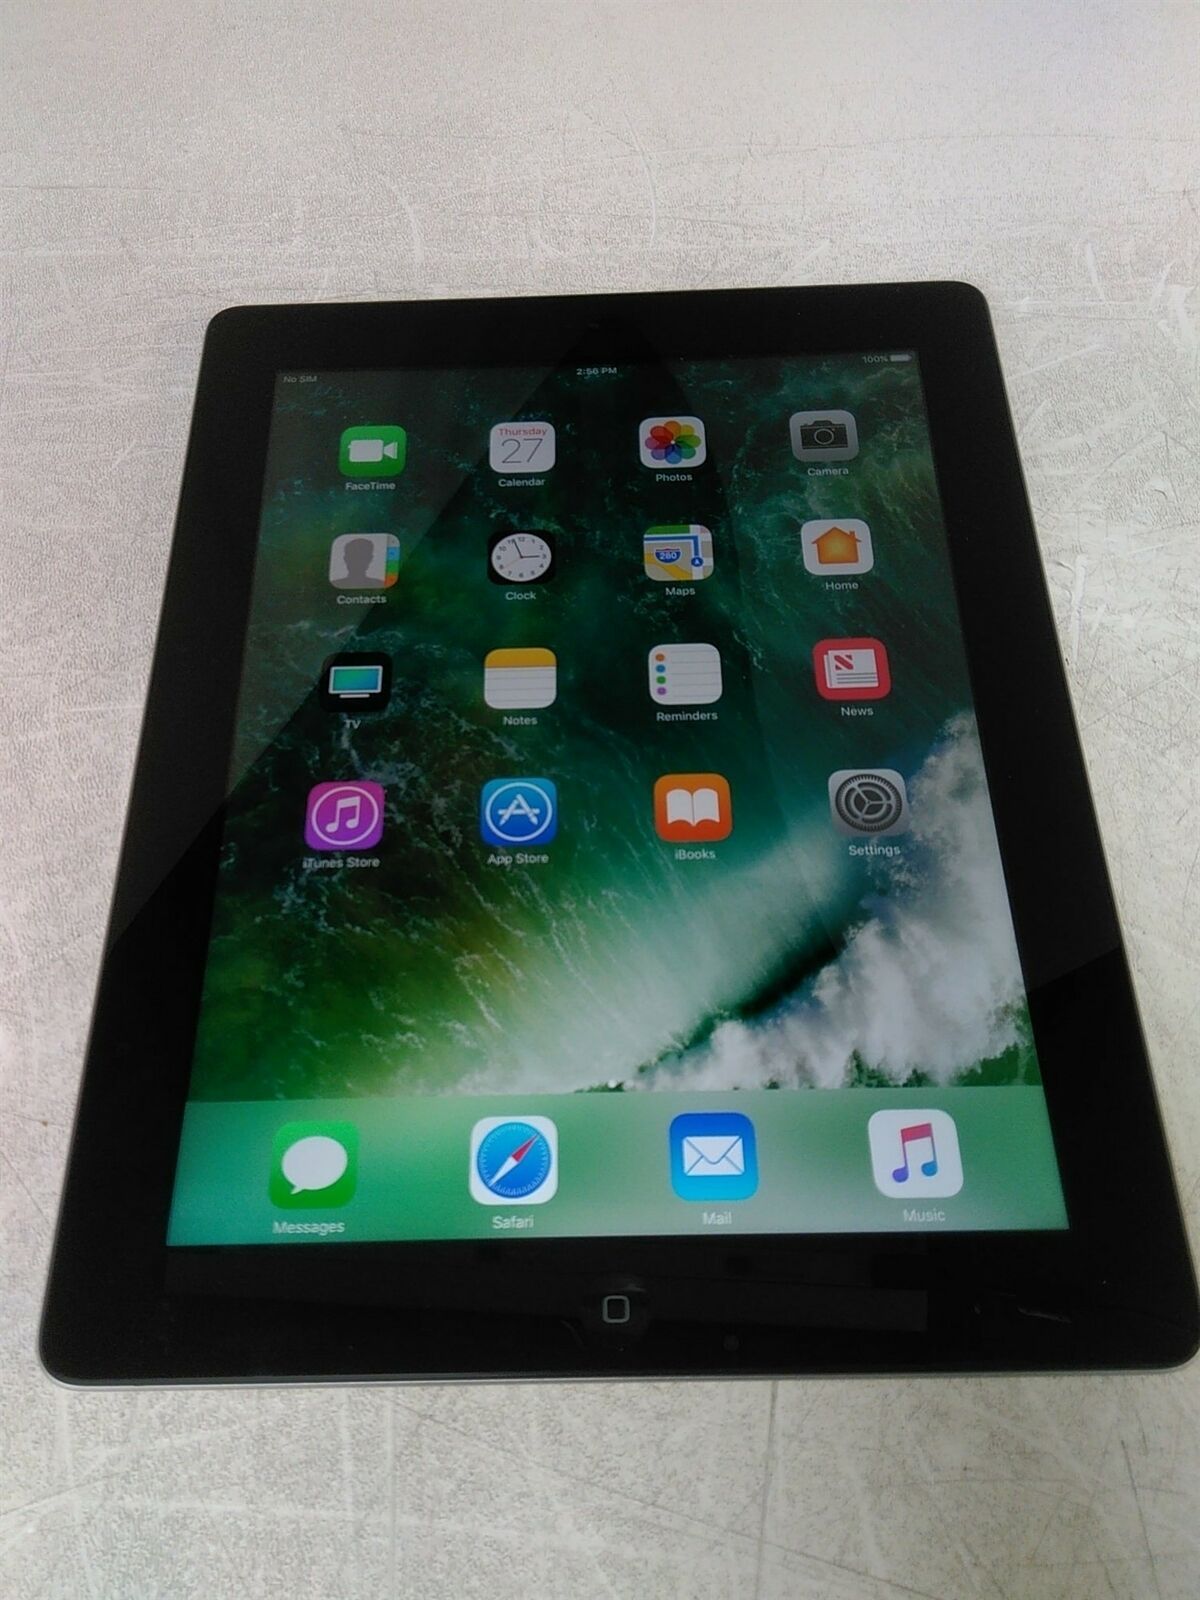 Apple iPad 3rd Gen Cellular AT&T A1430 9.7in Wi-Fi Black iOS Tablet 16GB 